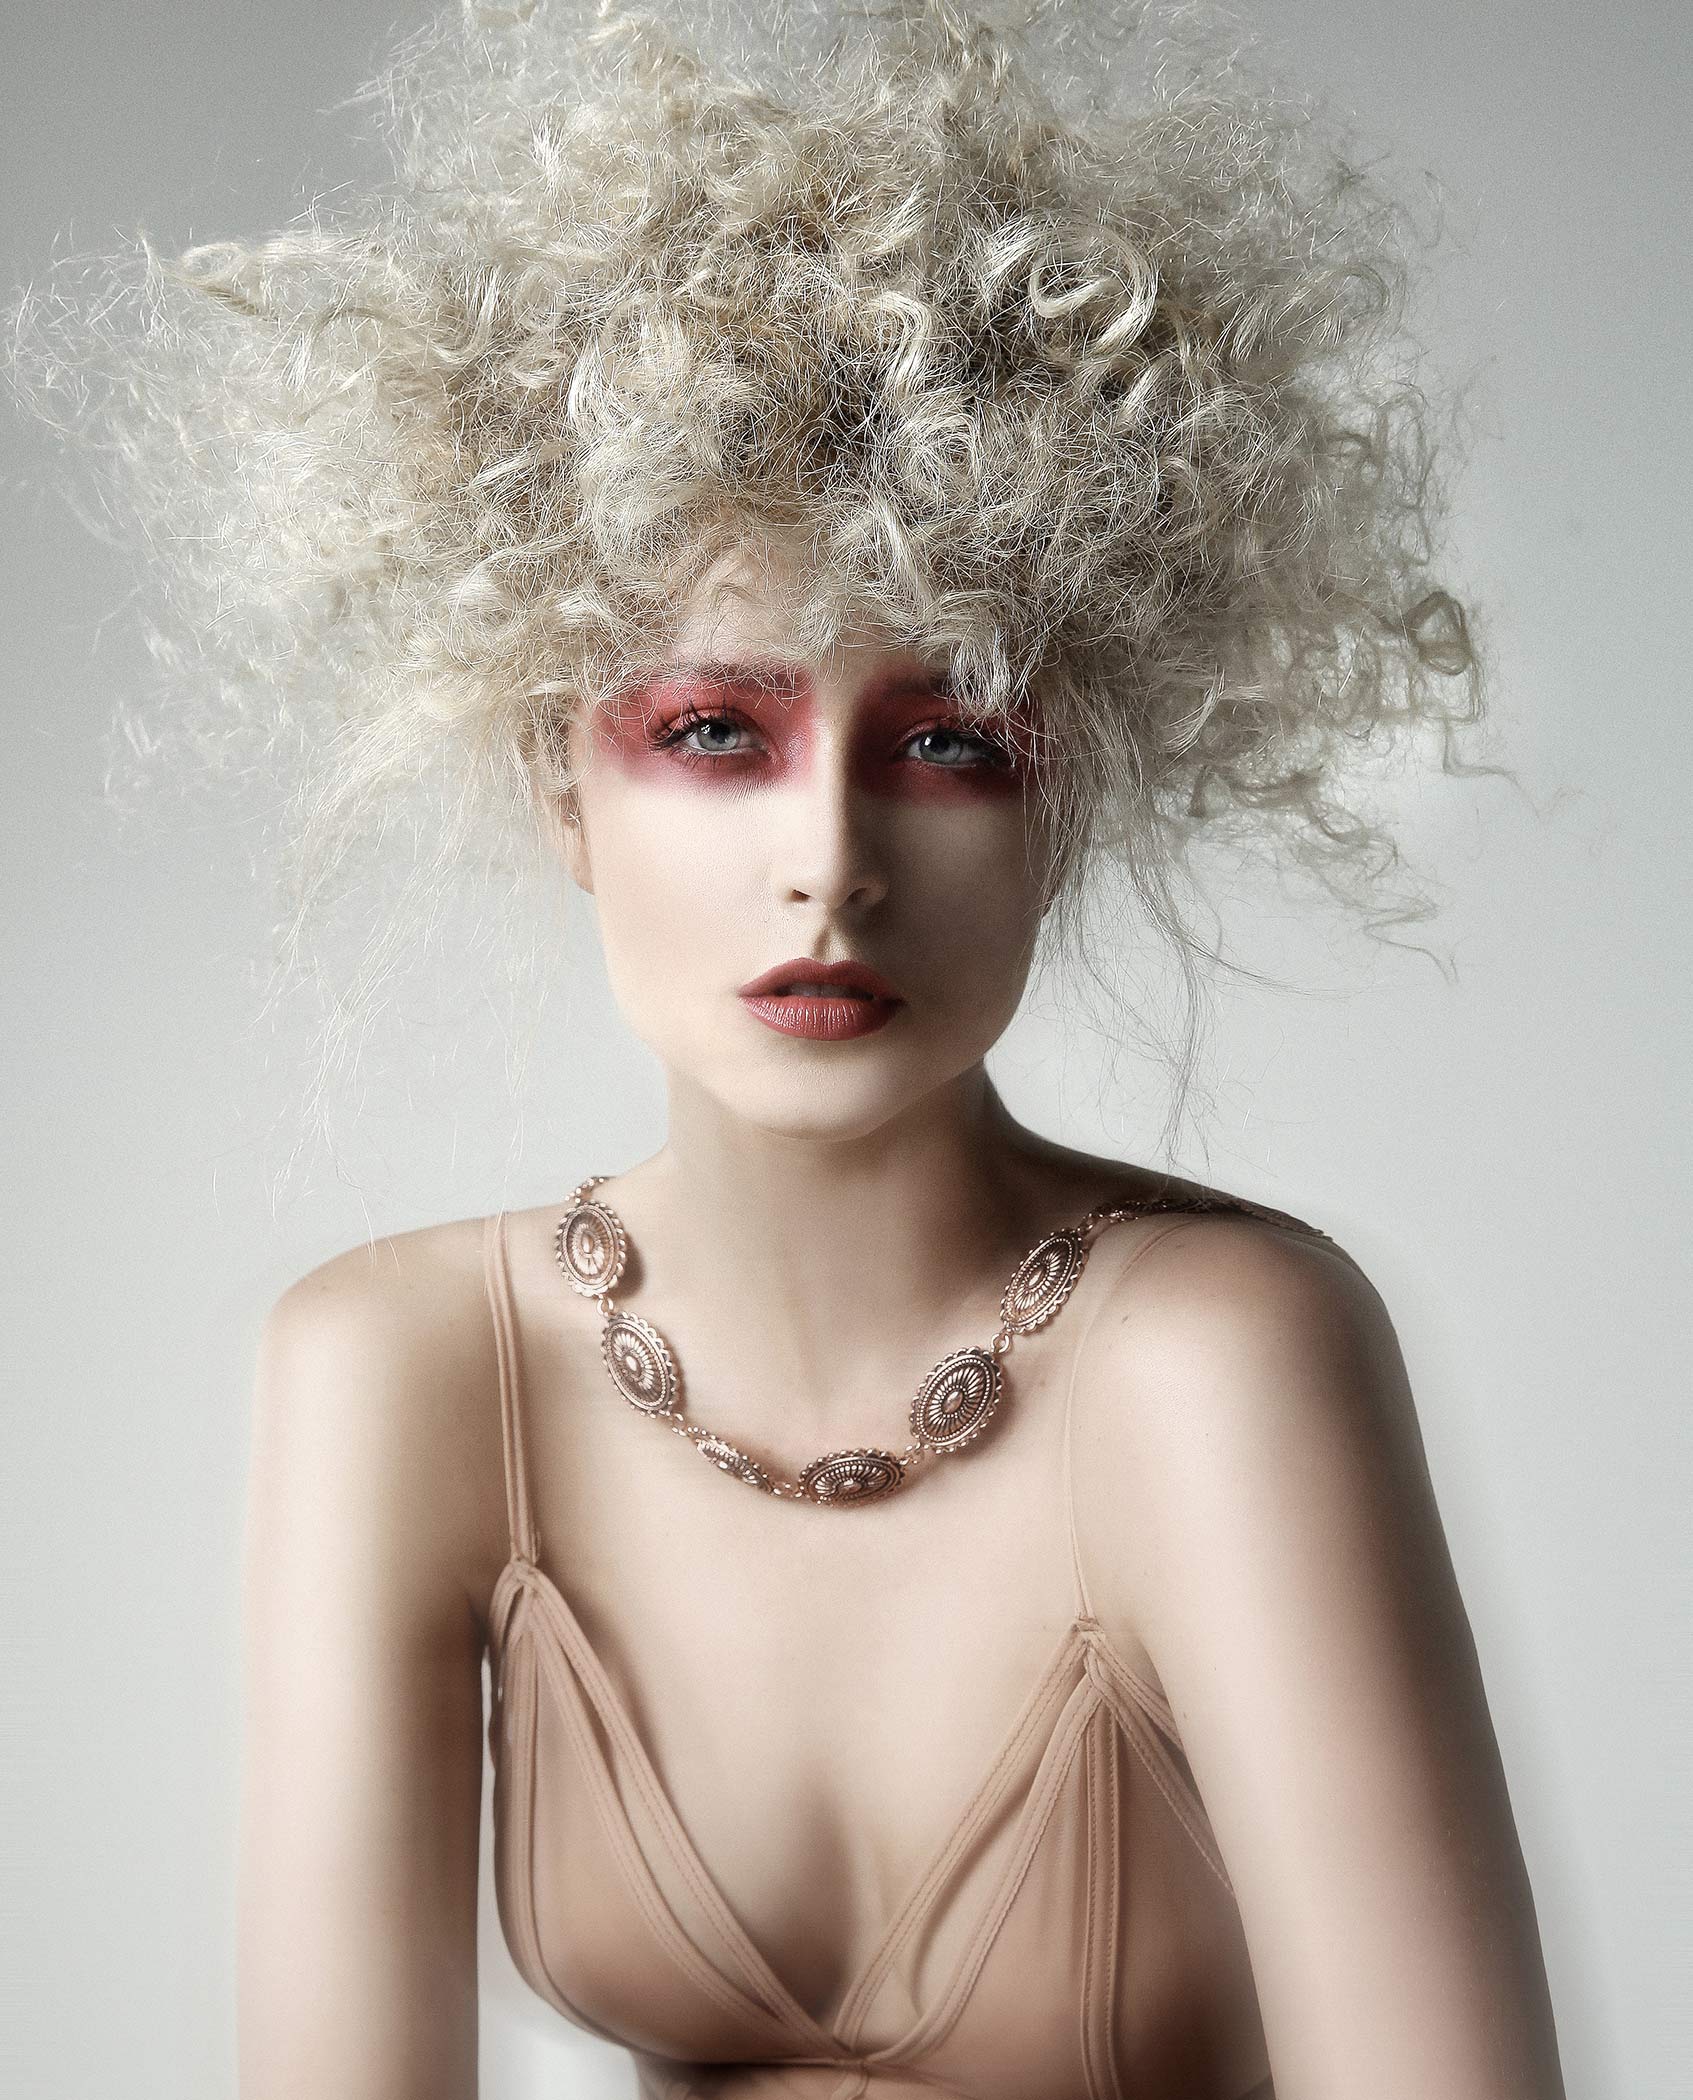 coolbob-hairstylist-contessa-finalist-salon-magazine-julie-carr-dragonfly-salonteam-paula-tizzard-hair-photography-competition-fashion-beauty